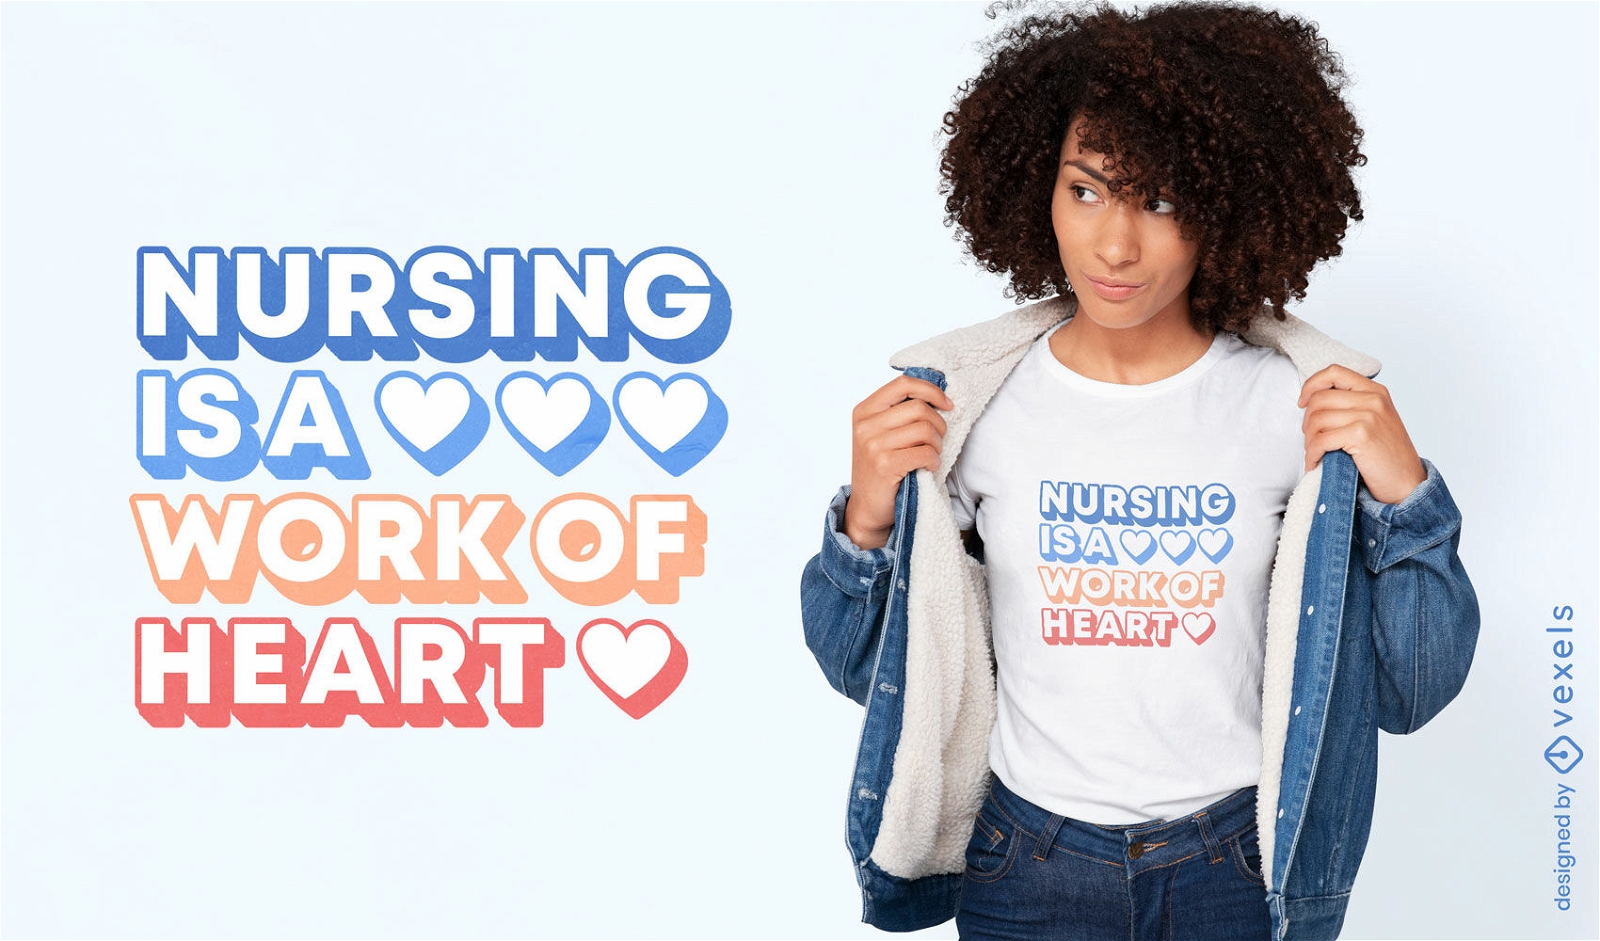 Nursing heart t-shirt design